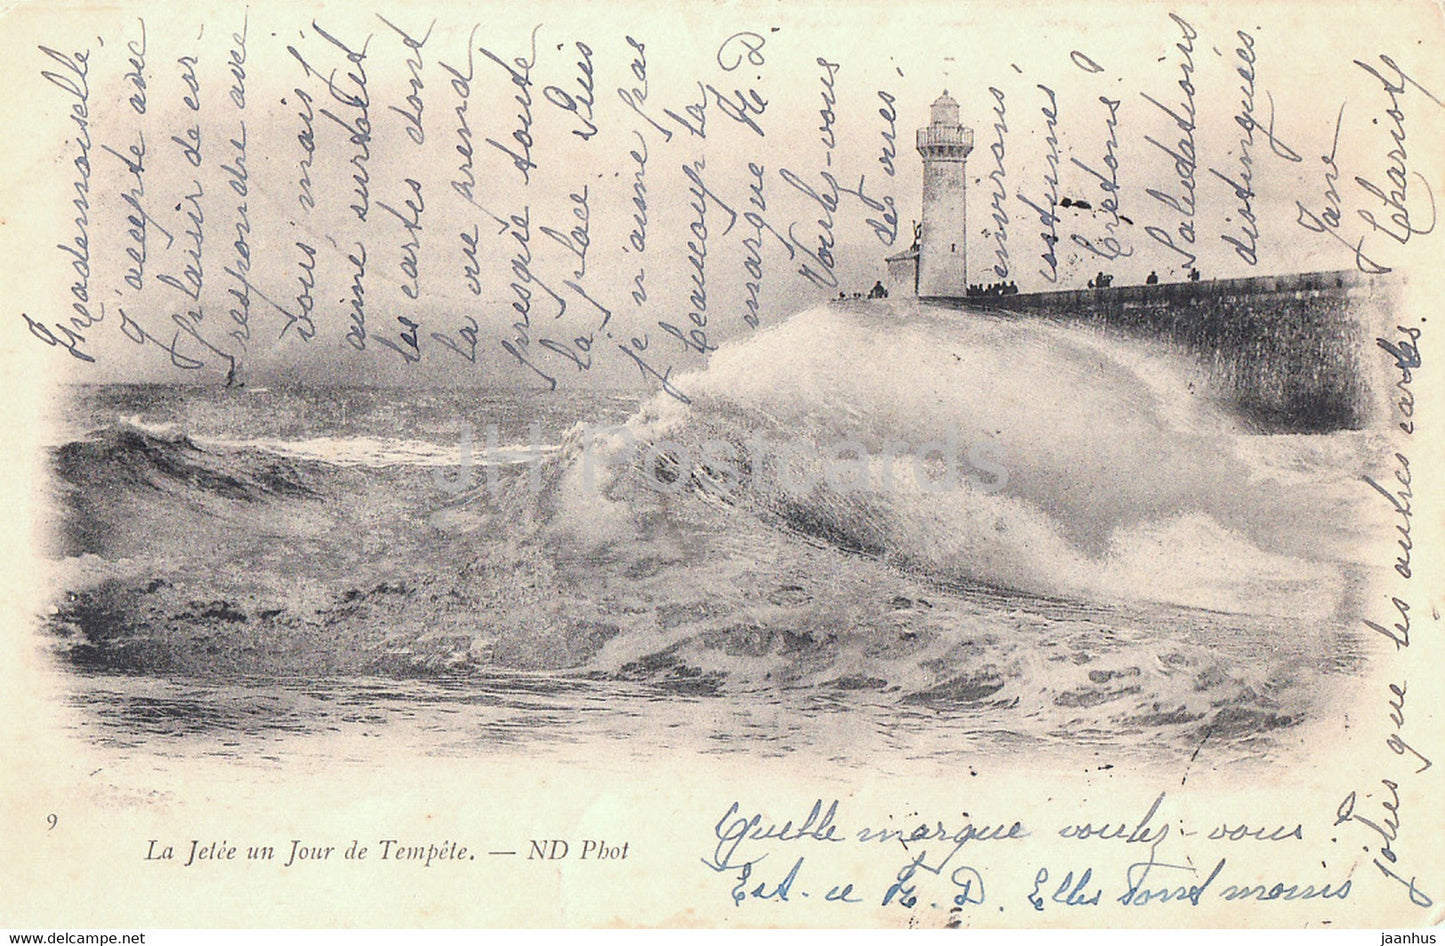 La Jetee un Jour de Tempete - 9 - lighthouse - old postcard - 1902 - France - used - JH Postcards